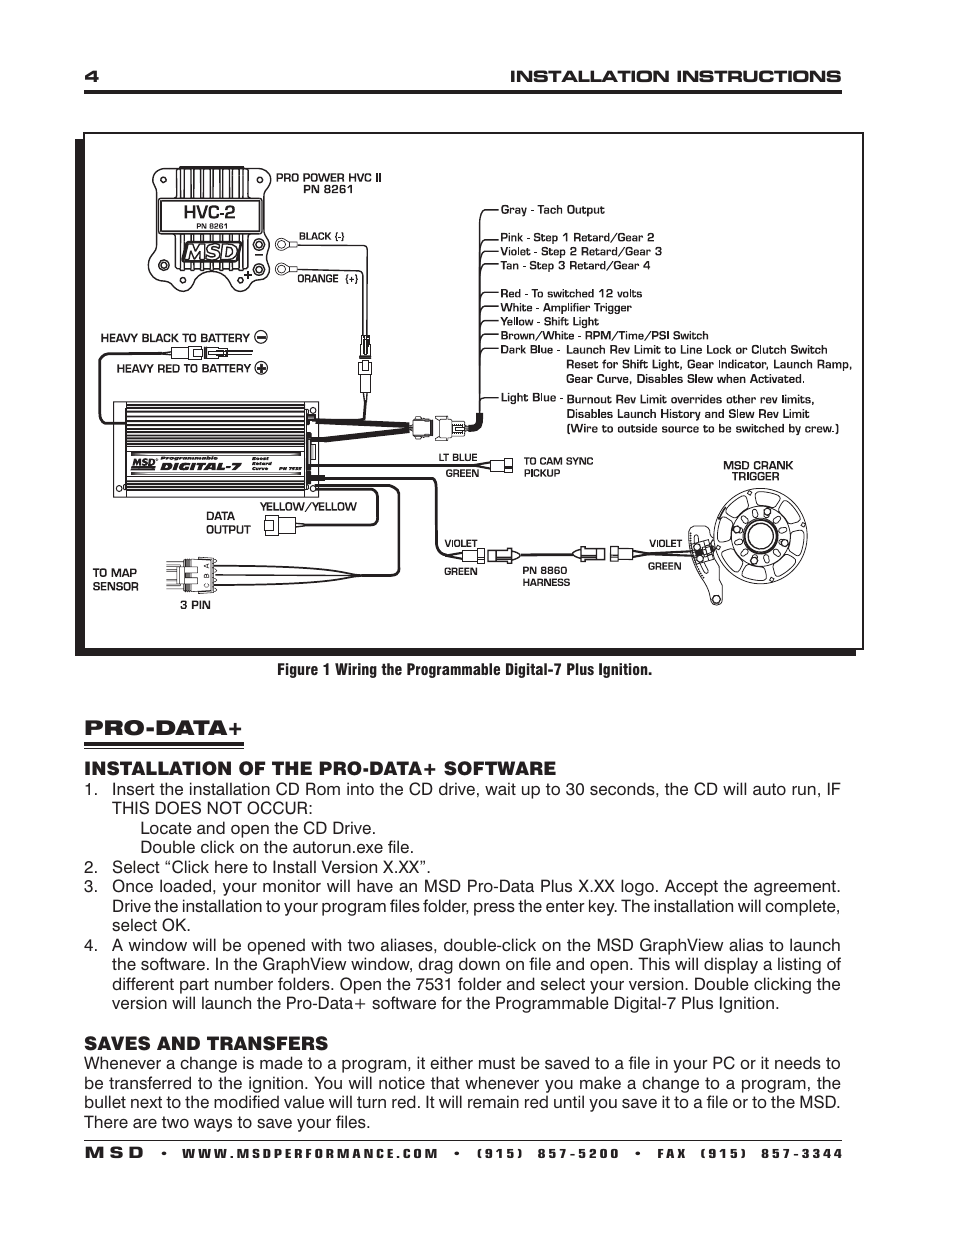 Msd 7531 Programmable Digital 7 Plus Installation User Manual Page 4 20 Original Mode